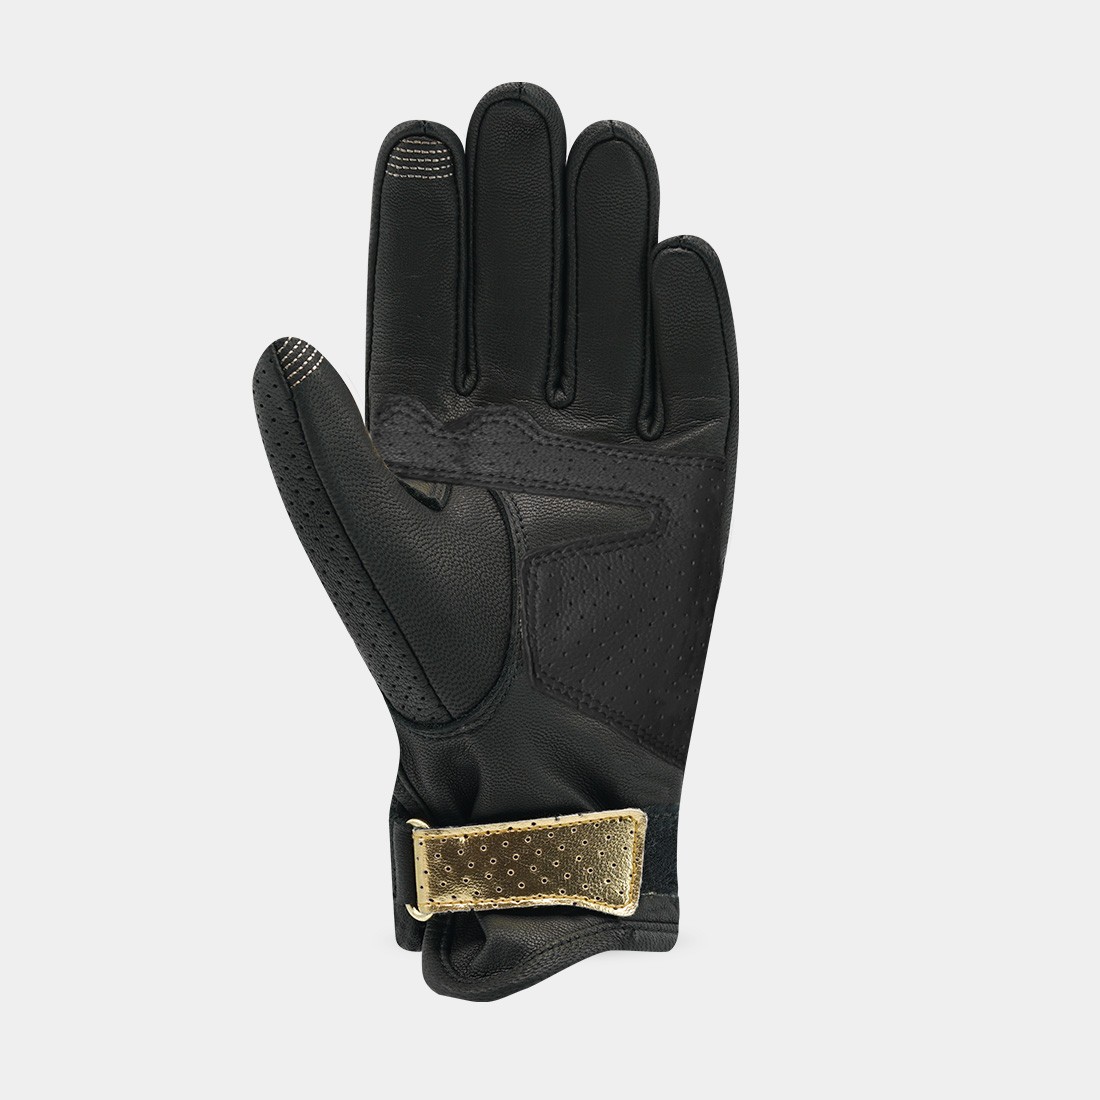 SHIRLEY GASOLINE - Women's summer motorcycle gloves